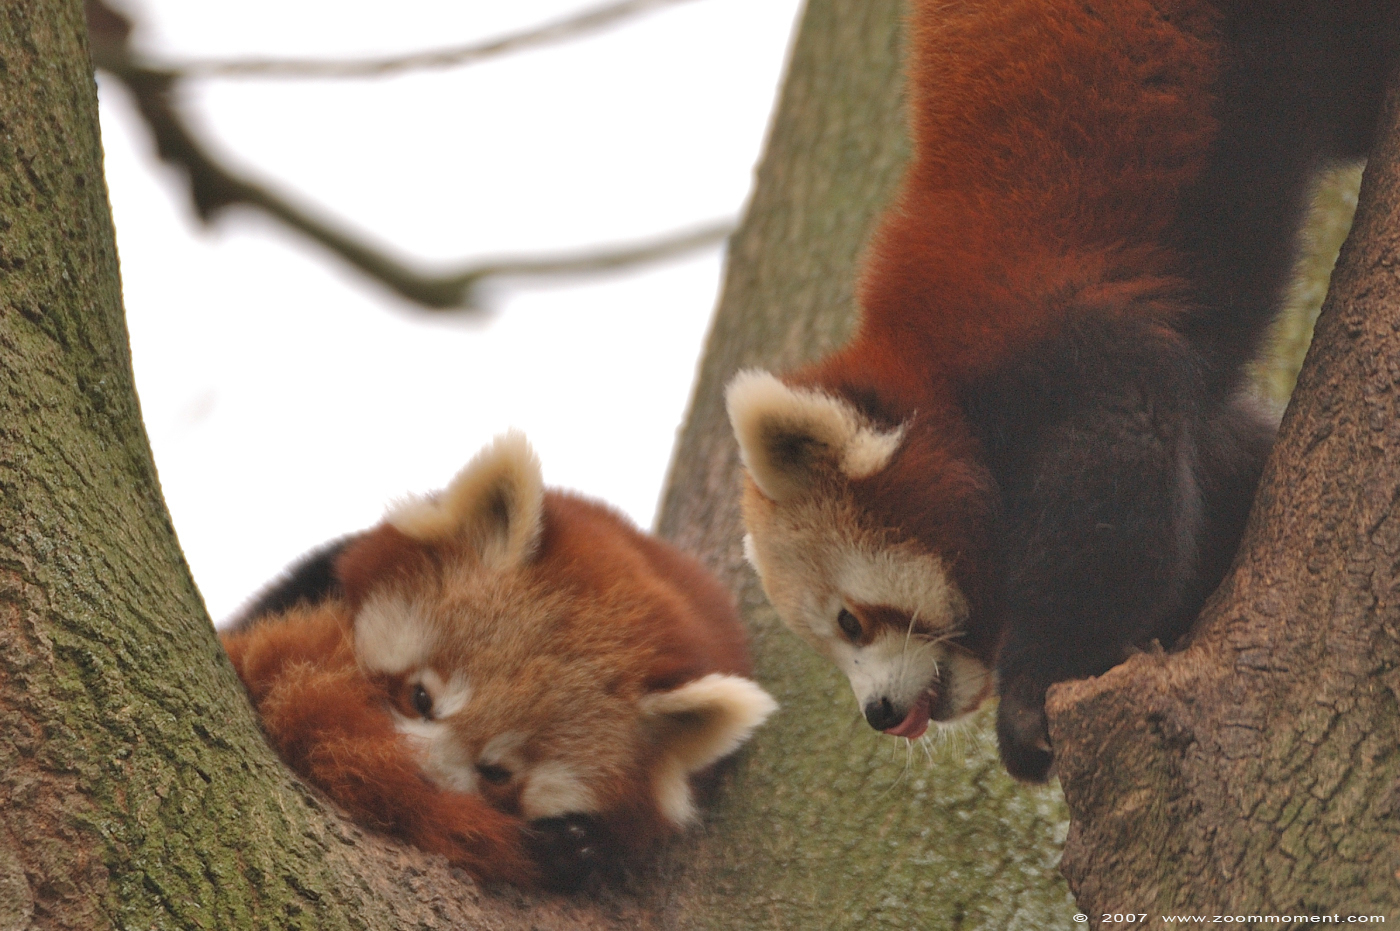 kleine of rode panda ( Ailurus fulgens ) lesser or red panda
Trefwoorden: Dortmund zoo Germany kleine rode panda Ailurus fulgens lesser red panda